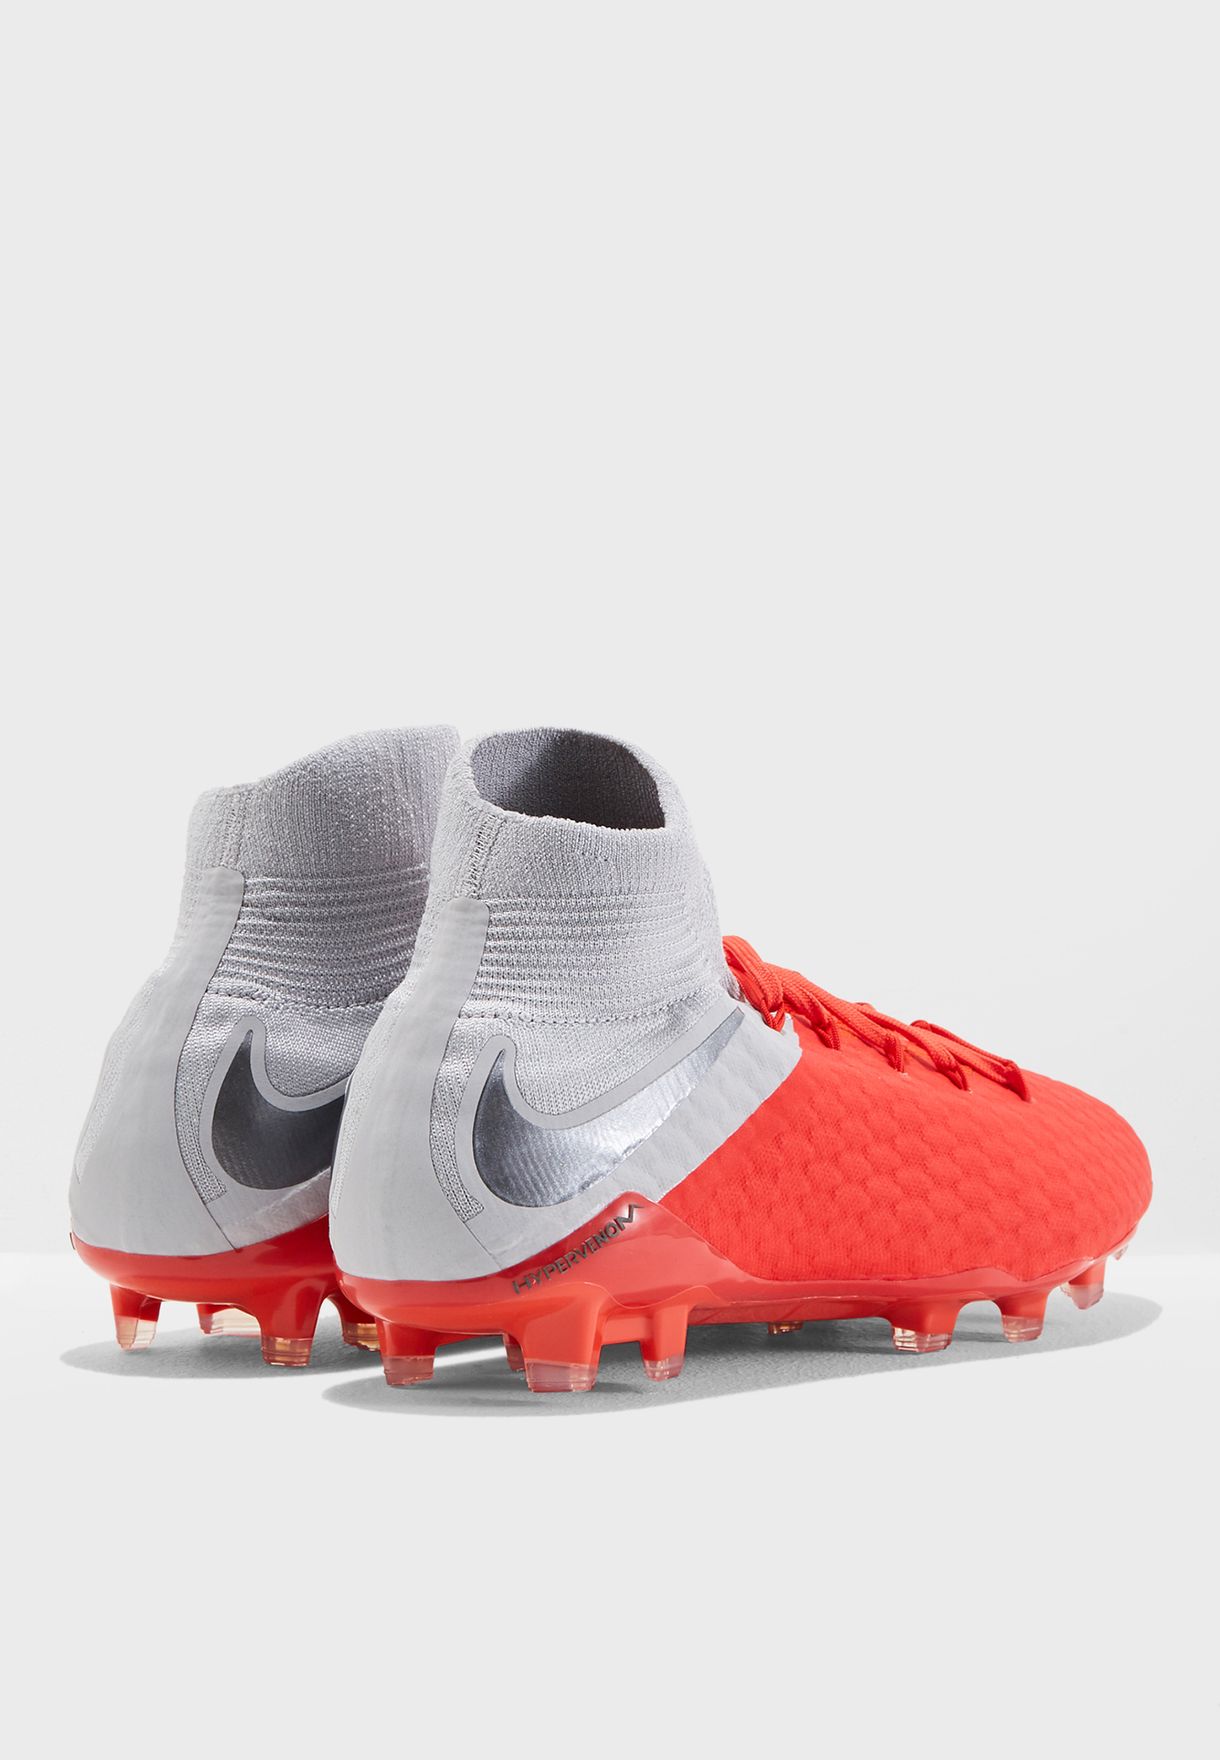 Hypervenom Soccer Shoes